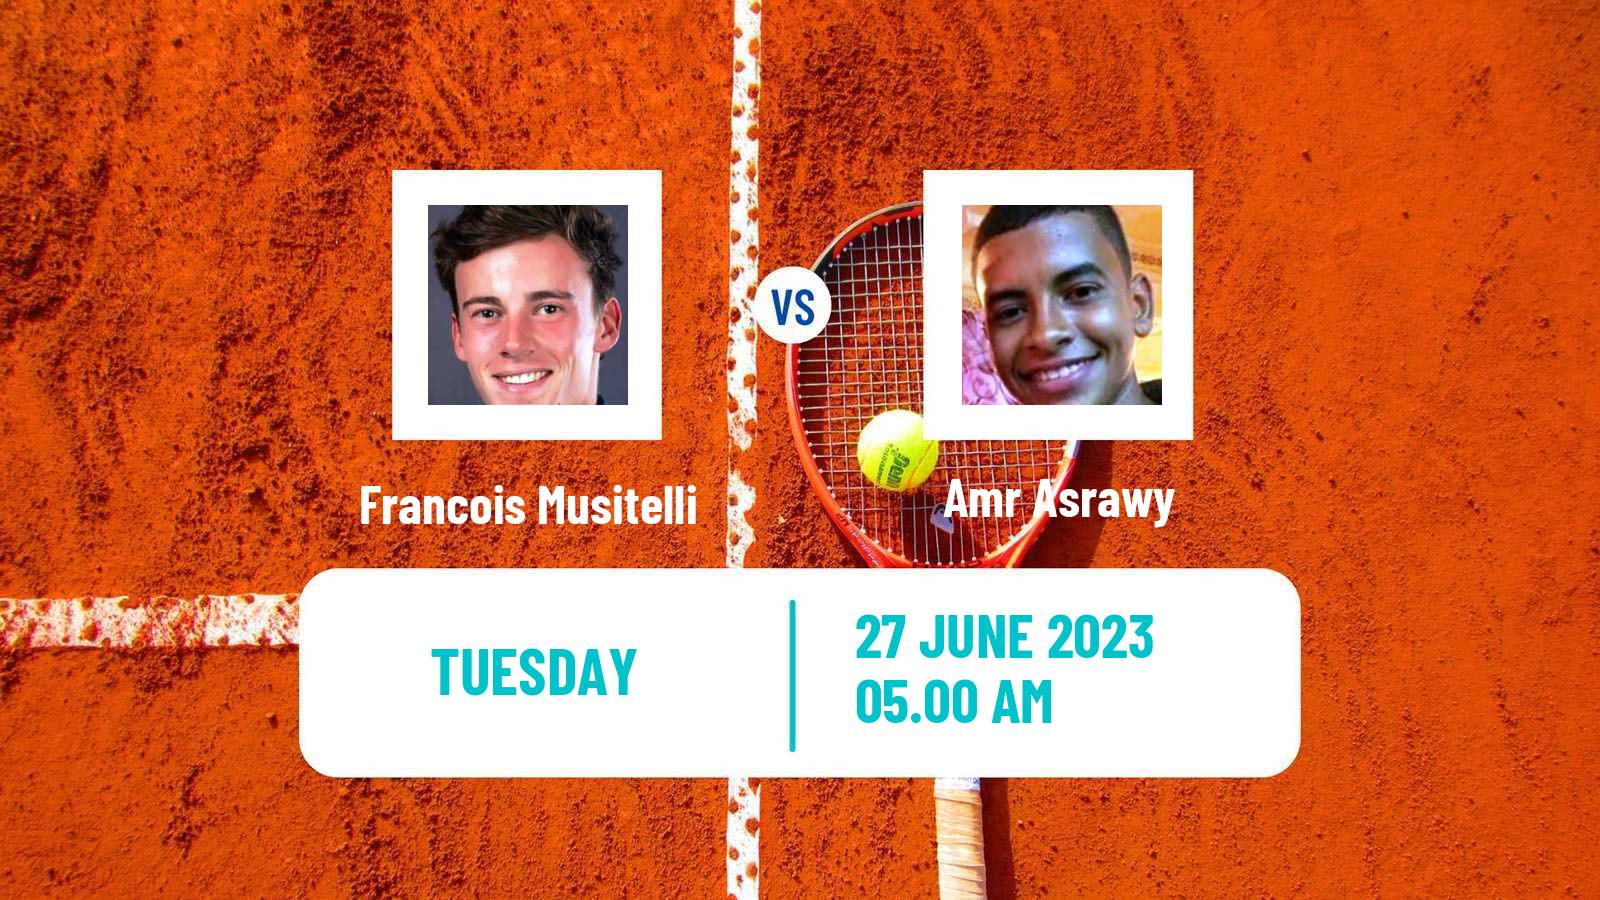 Tennis ITF M15 Kamen Men Francois Musitelli - Amr Asrawy